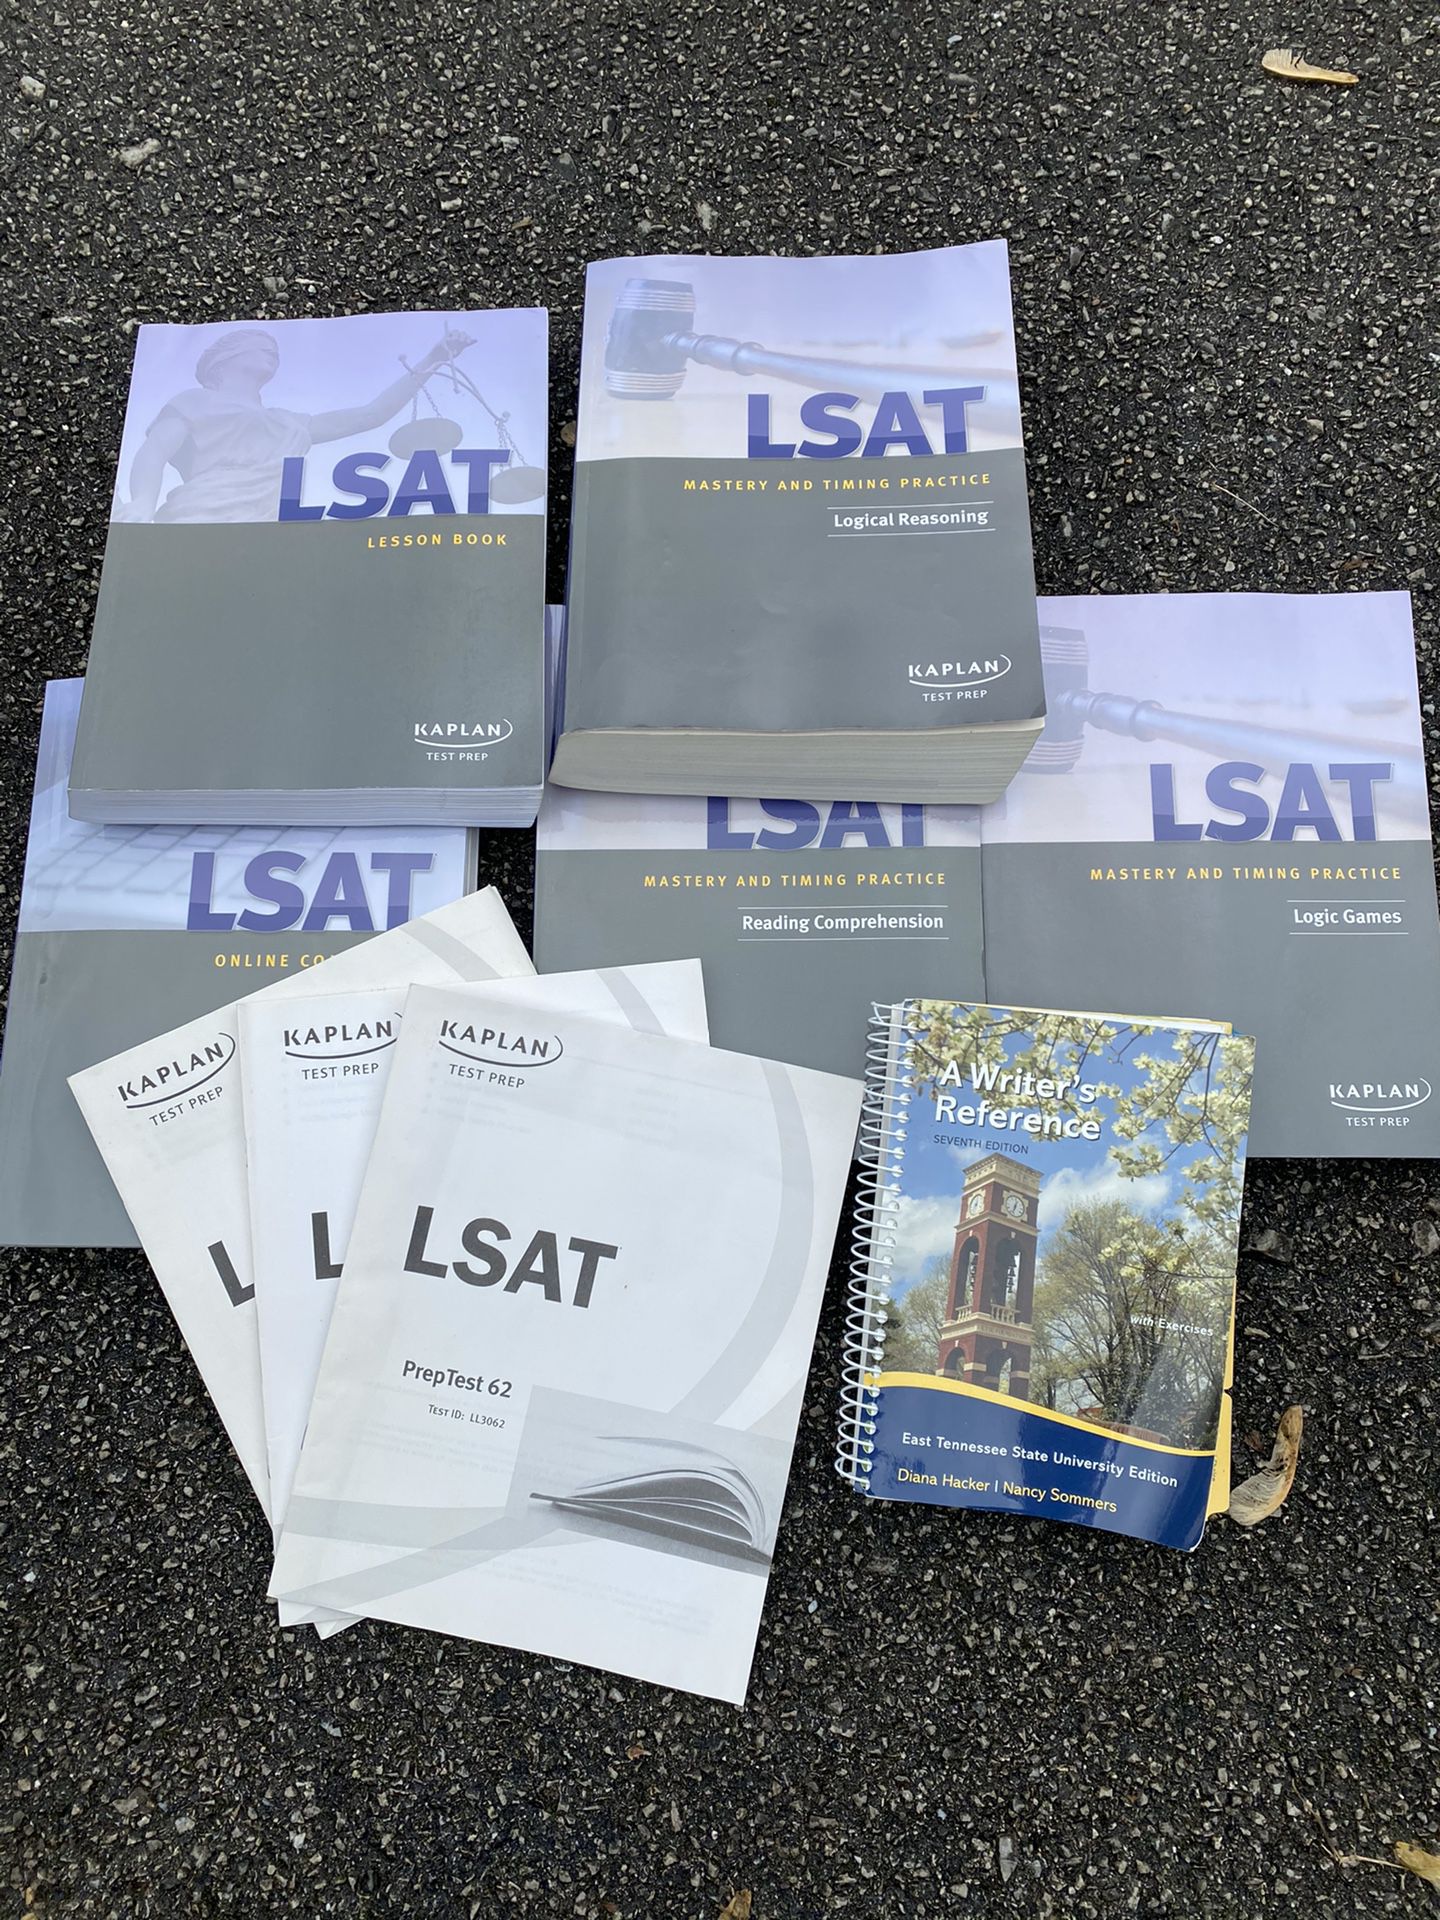 LSAT study material